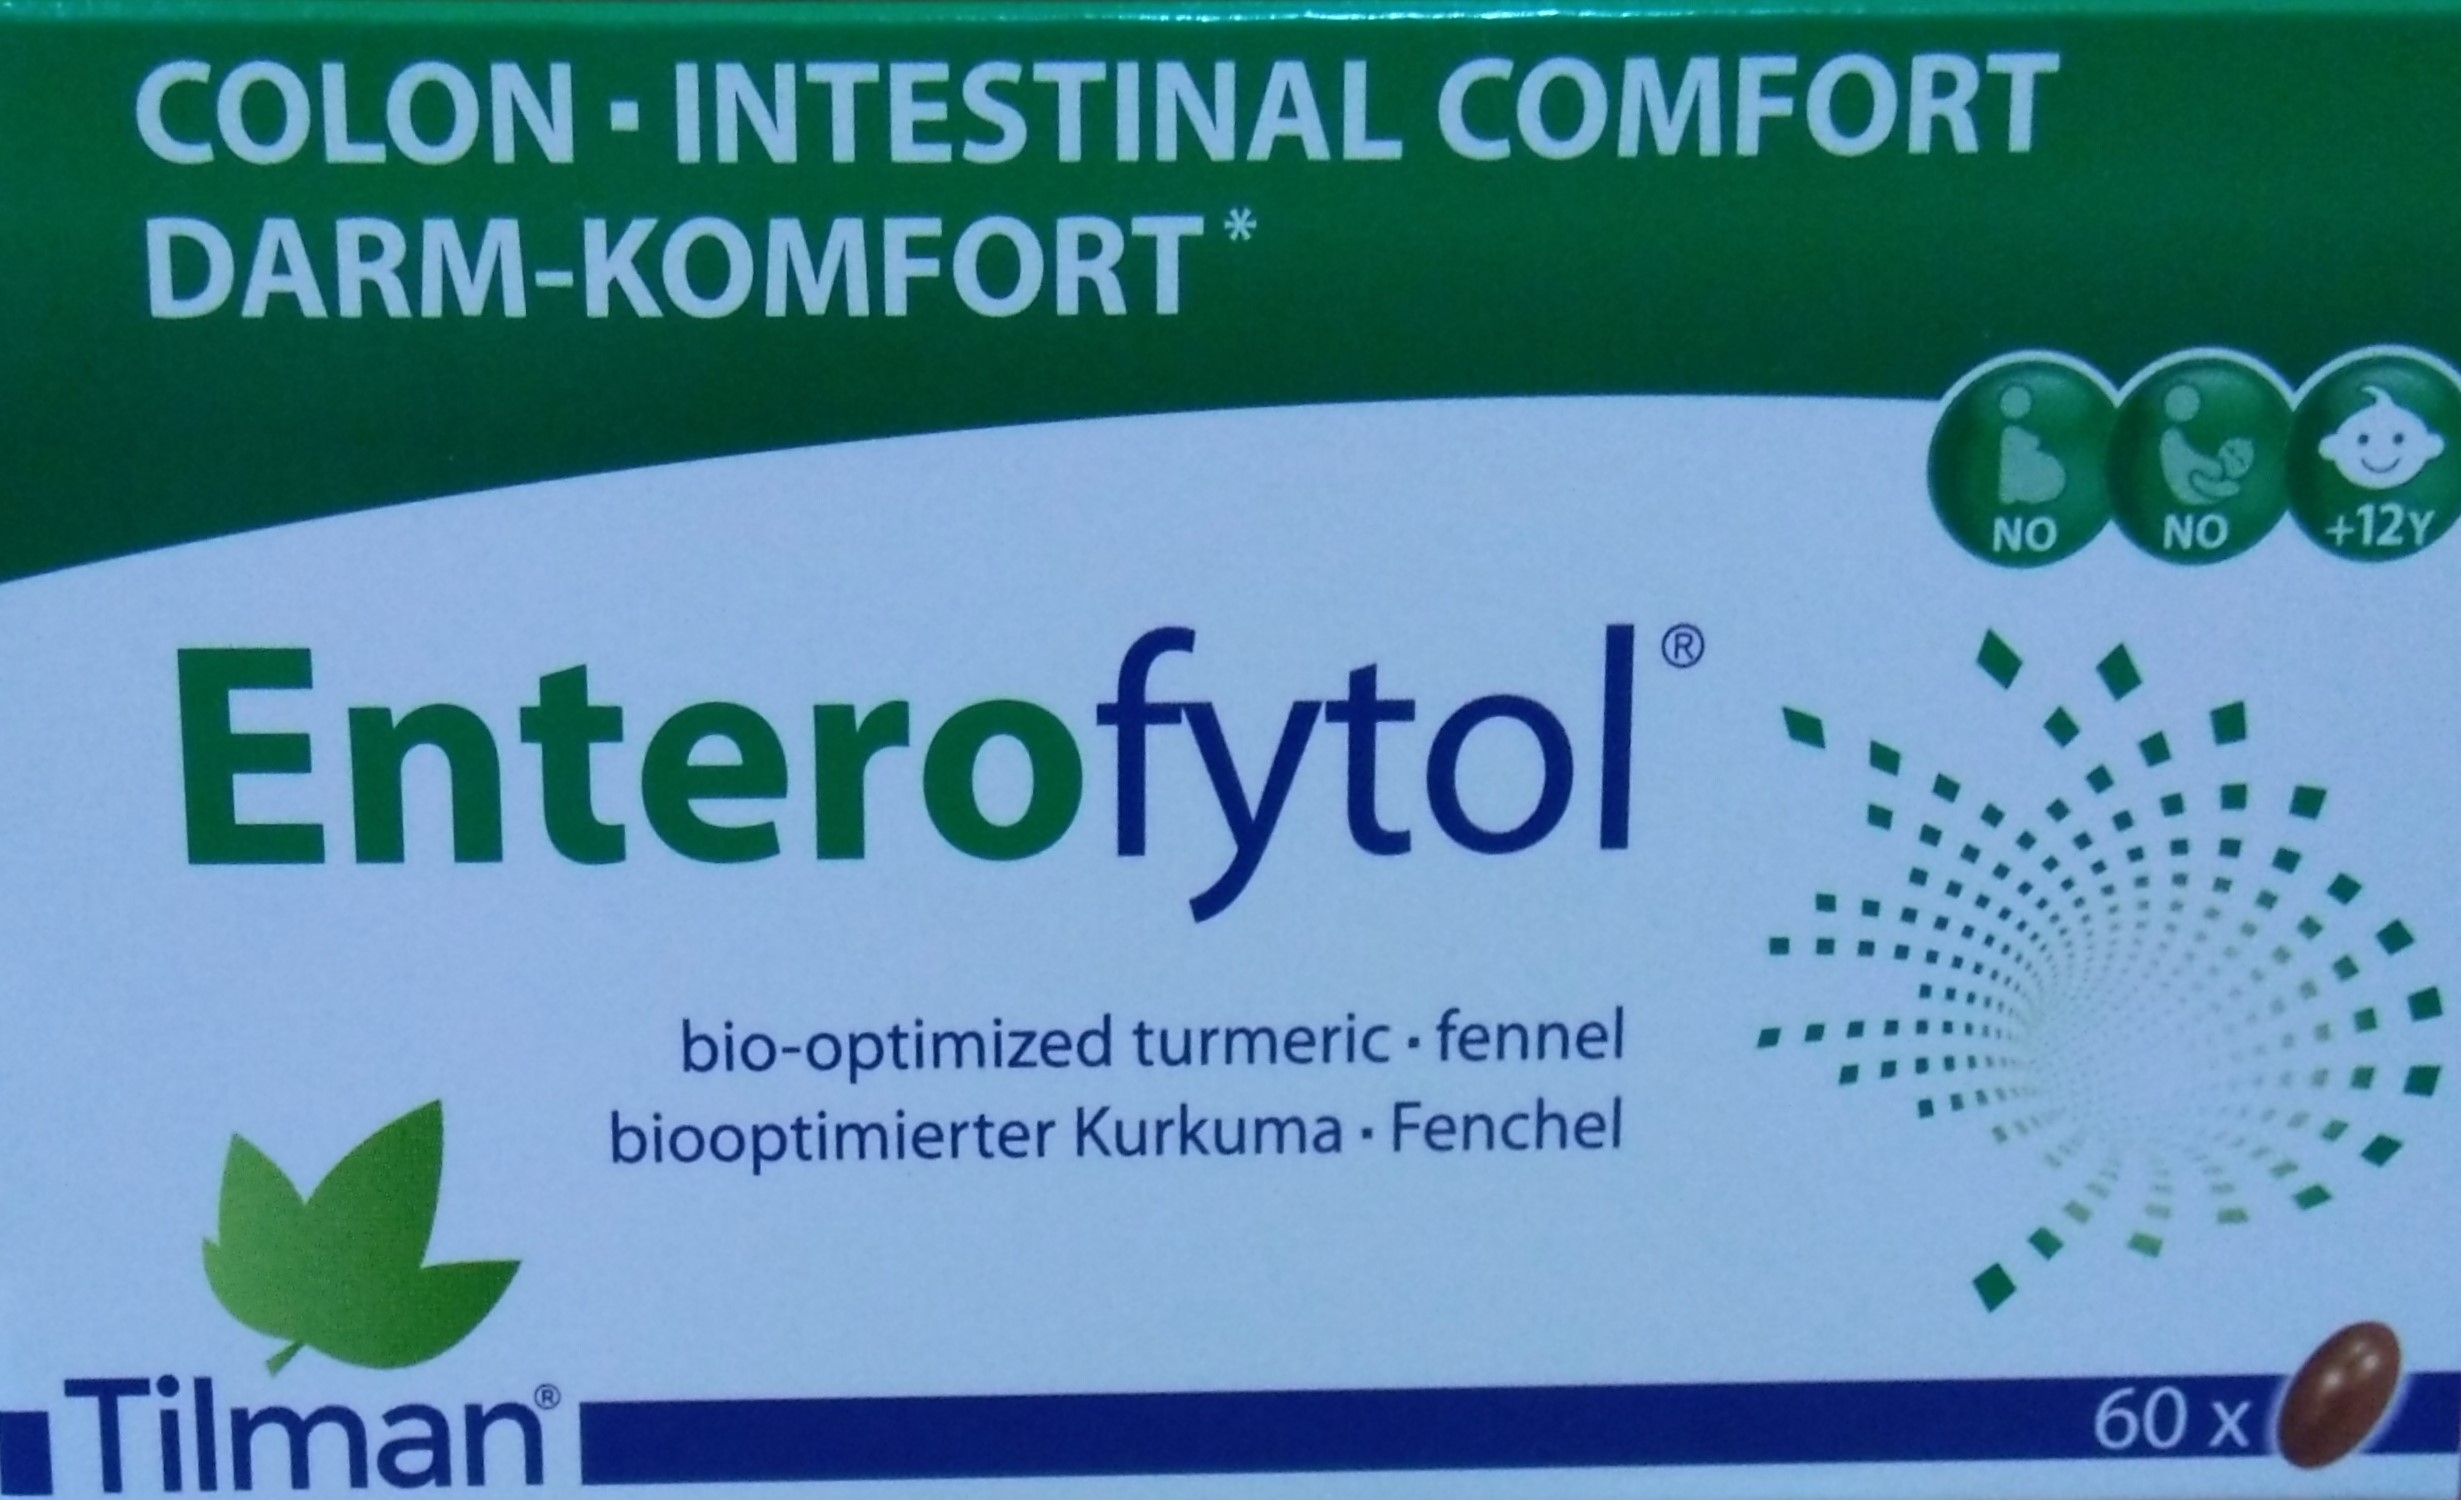 Enterofytol